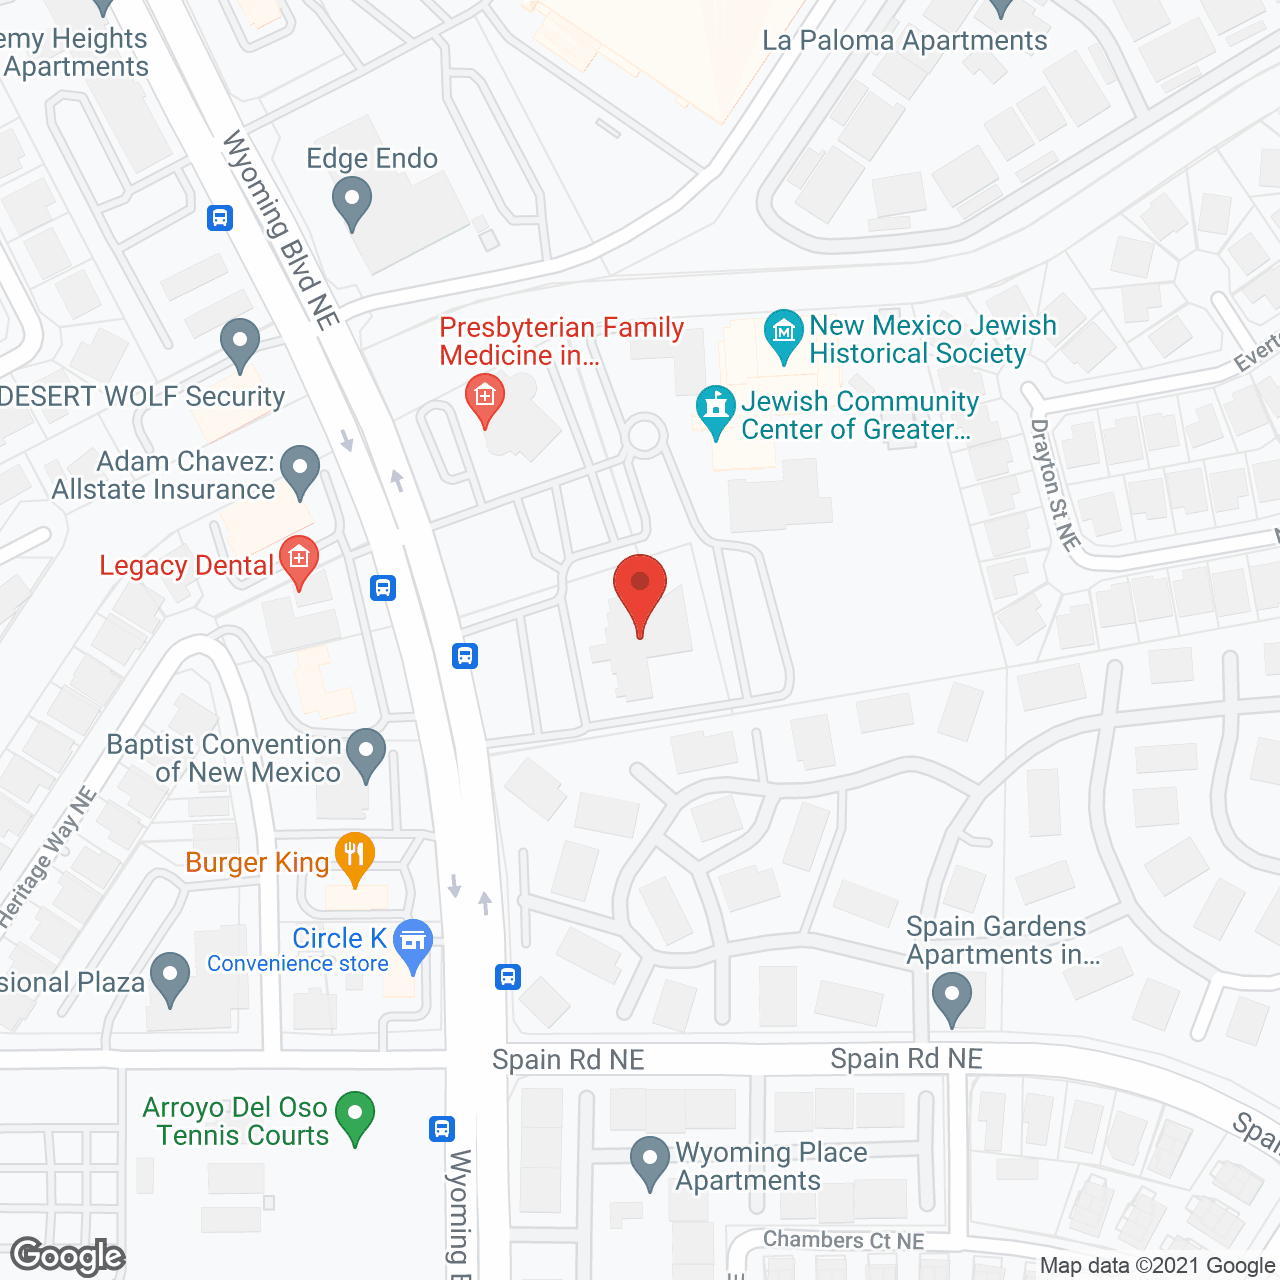 David Specter Shalom House in google map